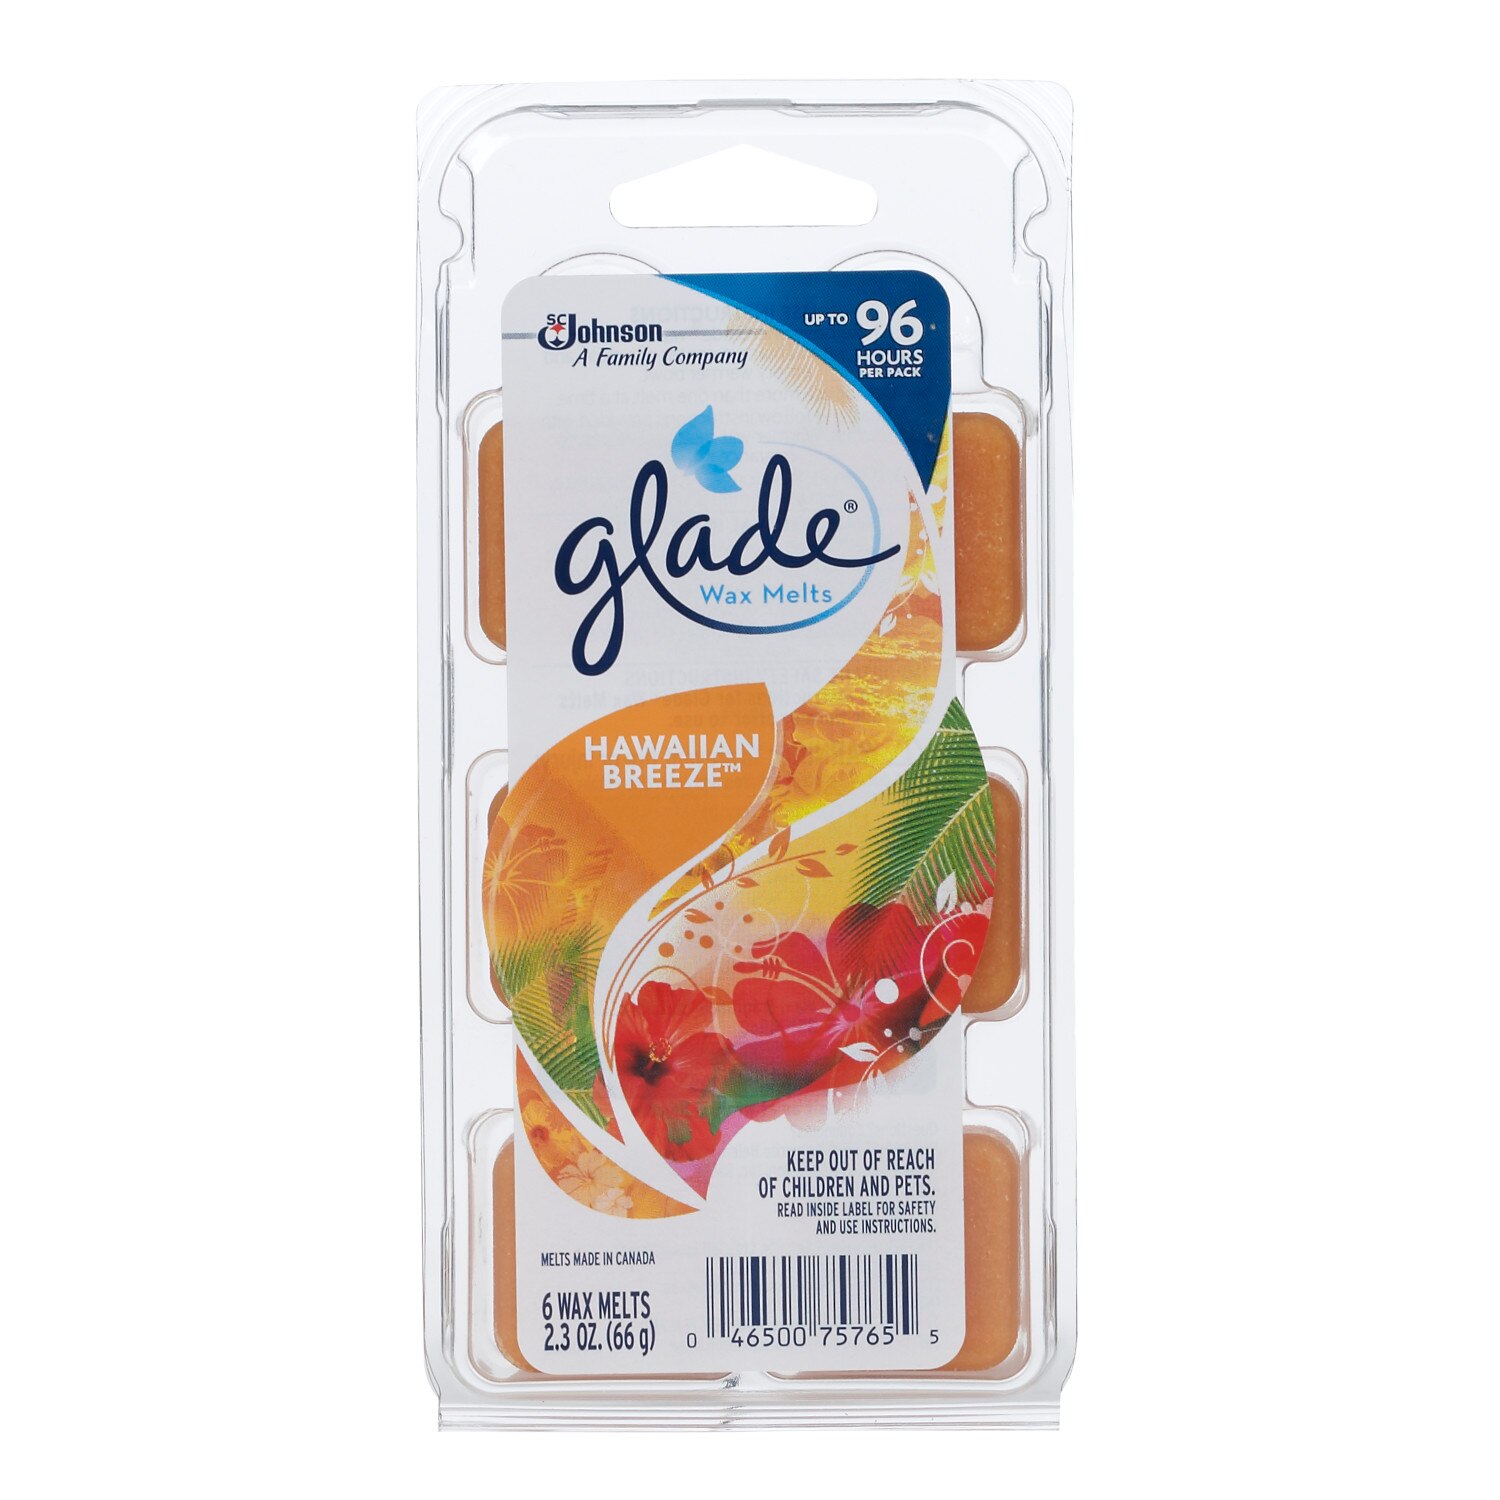 Glade Wax Melts Air Freshener Refill, Hawaiian Breeze, 6 CT